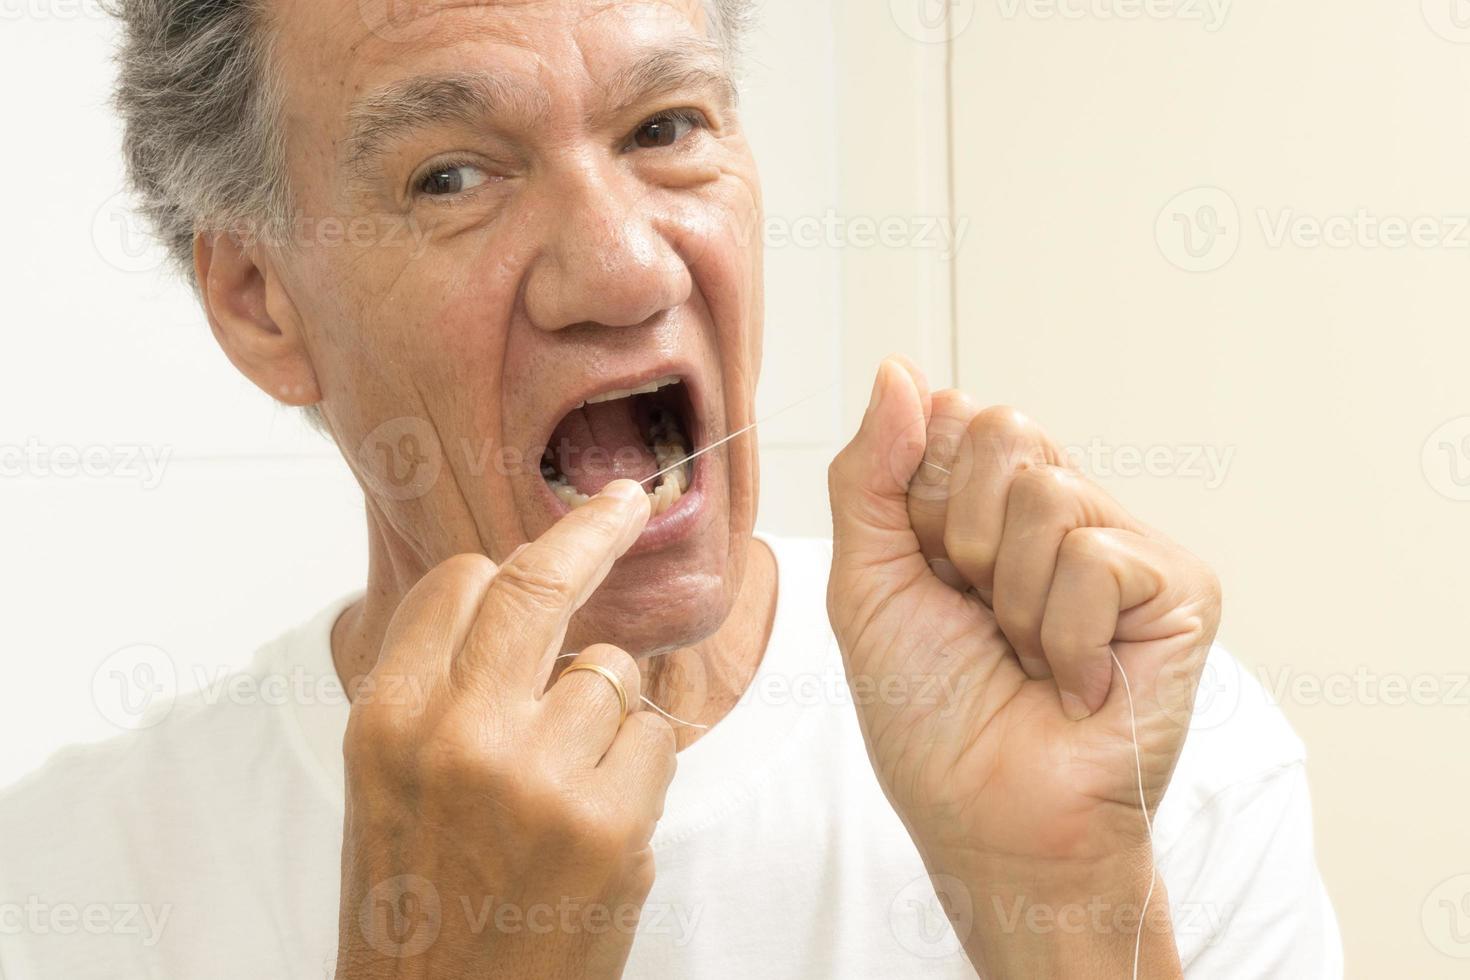 Senior man flossing his teeth with dental floss photo